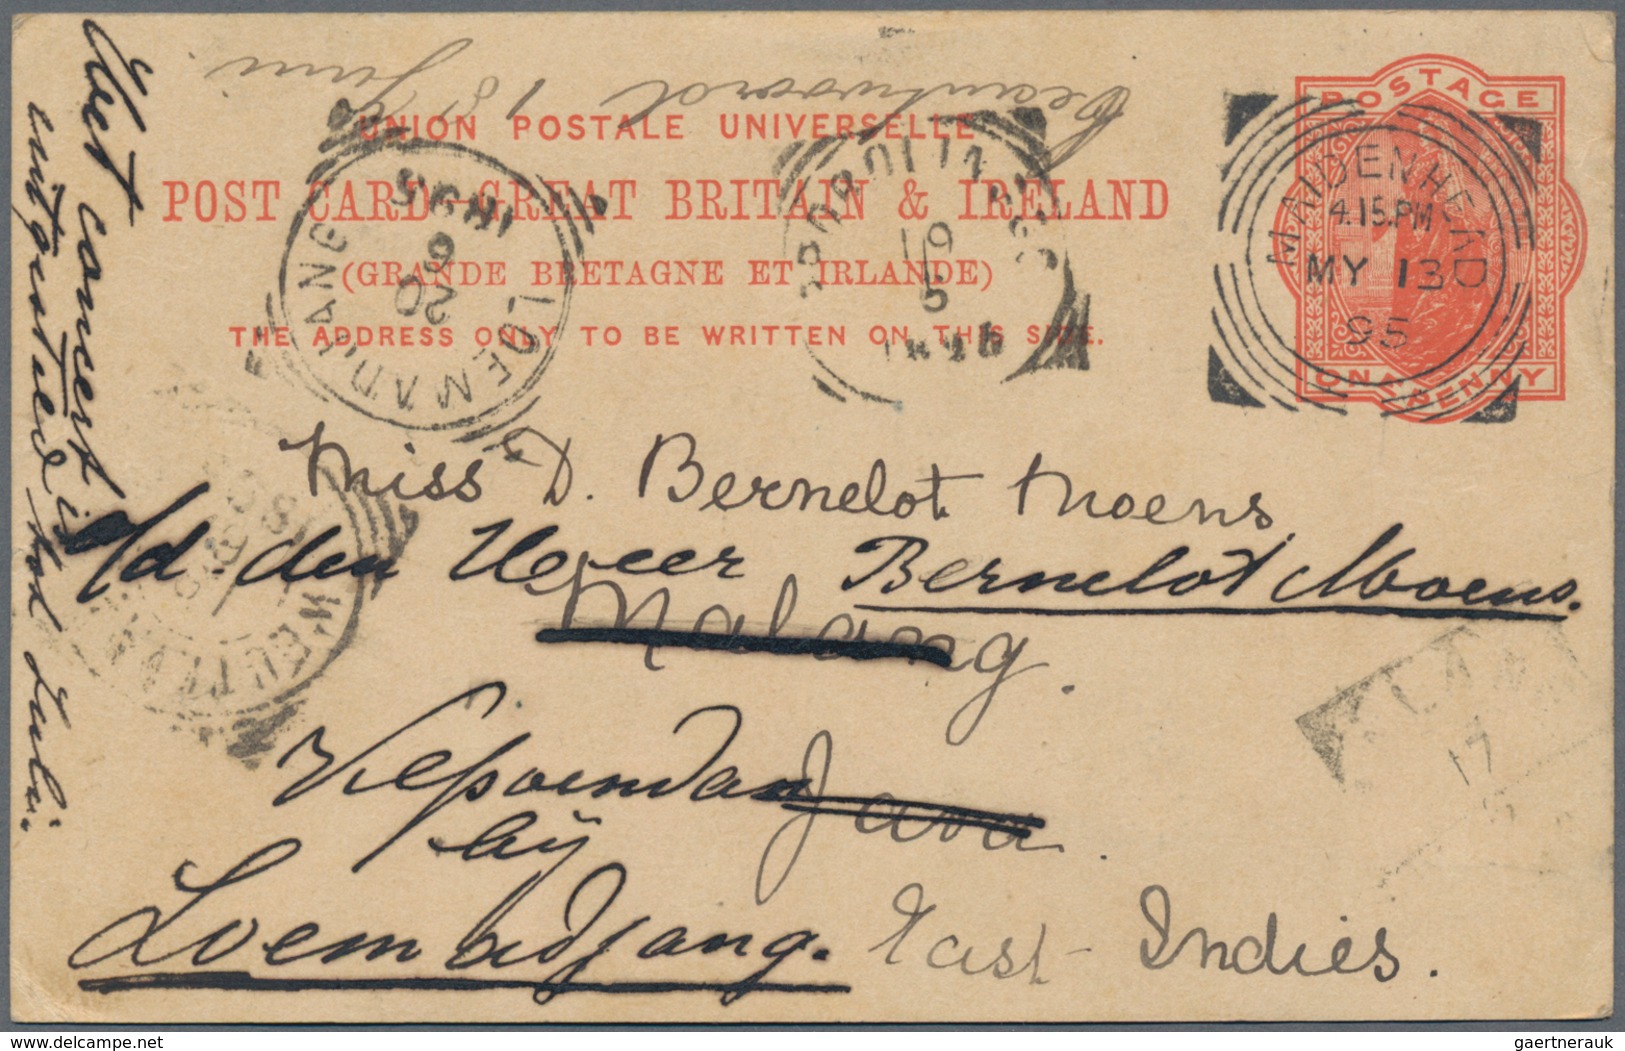 Großbritannien - Ganzsachen: 1895, Card QV 1d Canc. "MAIDENHEAD MY 13 95" To Malang/Netherlands East - 1840 Mulready Envelopes & Lettersheets